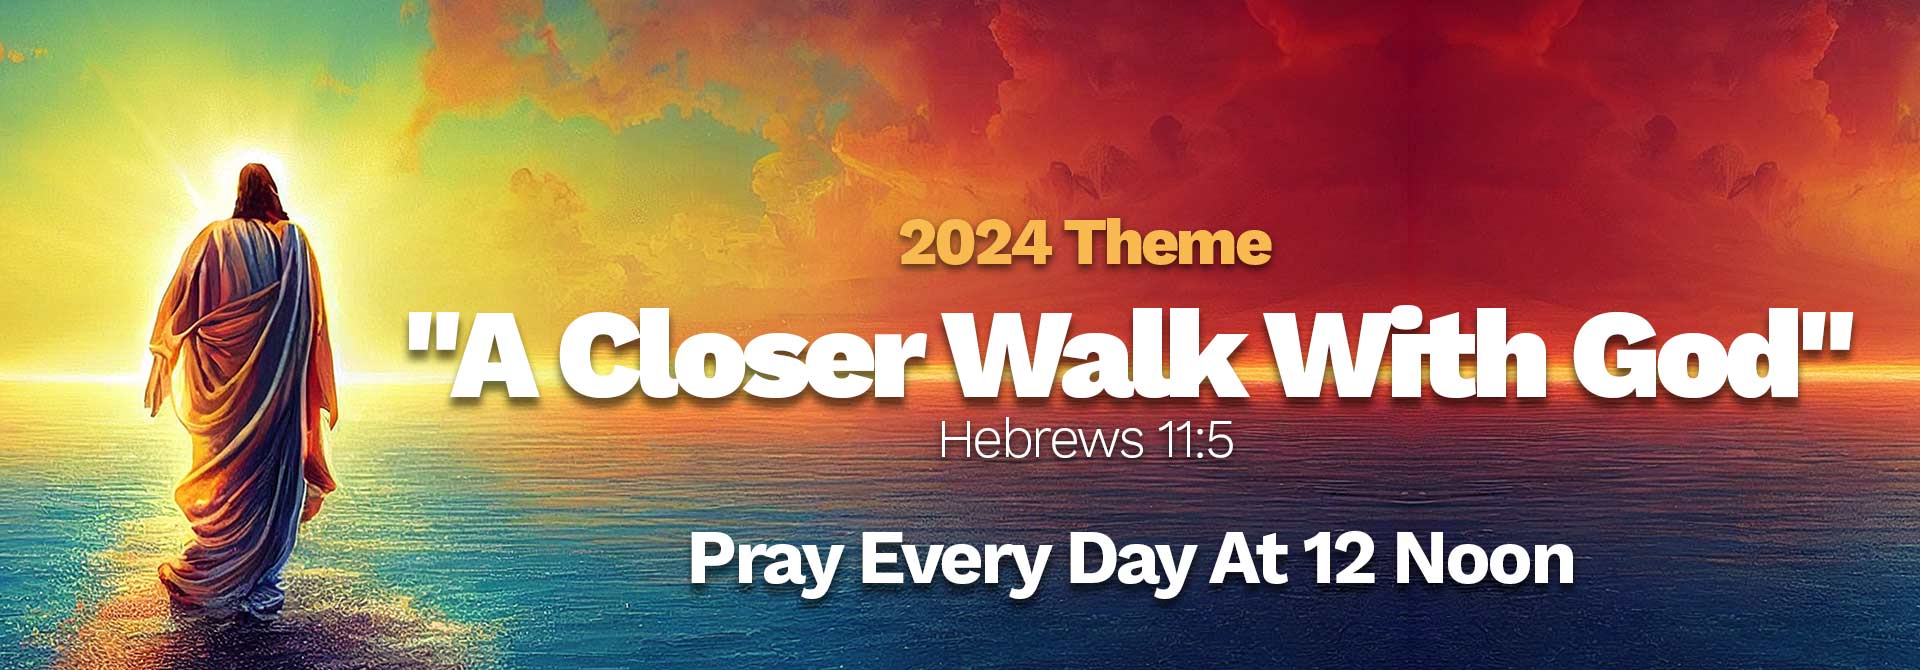 2024 Theme - A Closer Walk With God